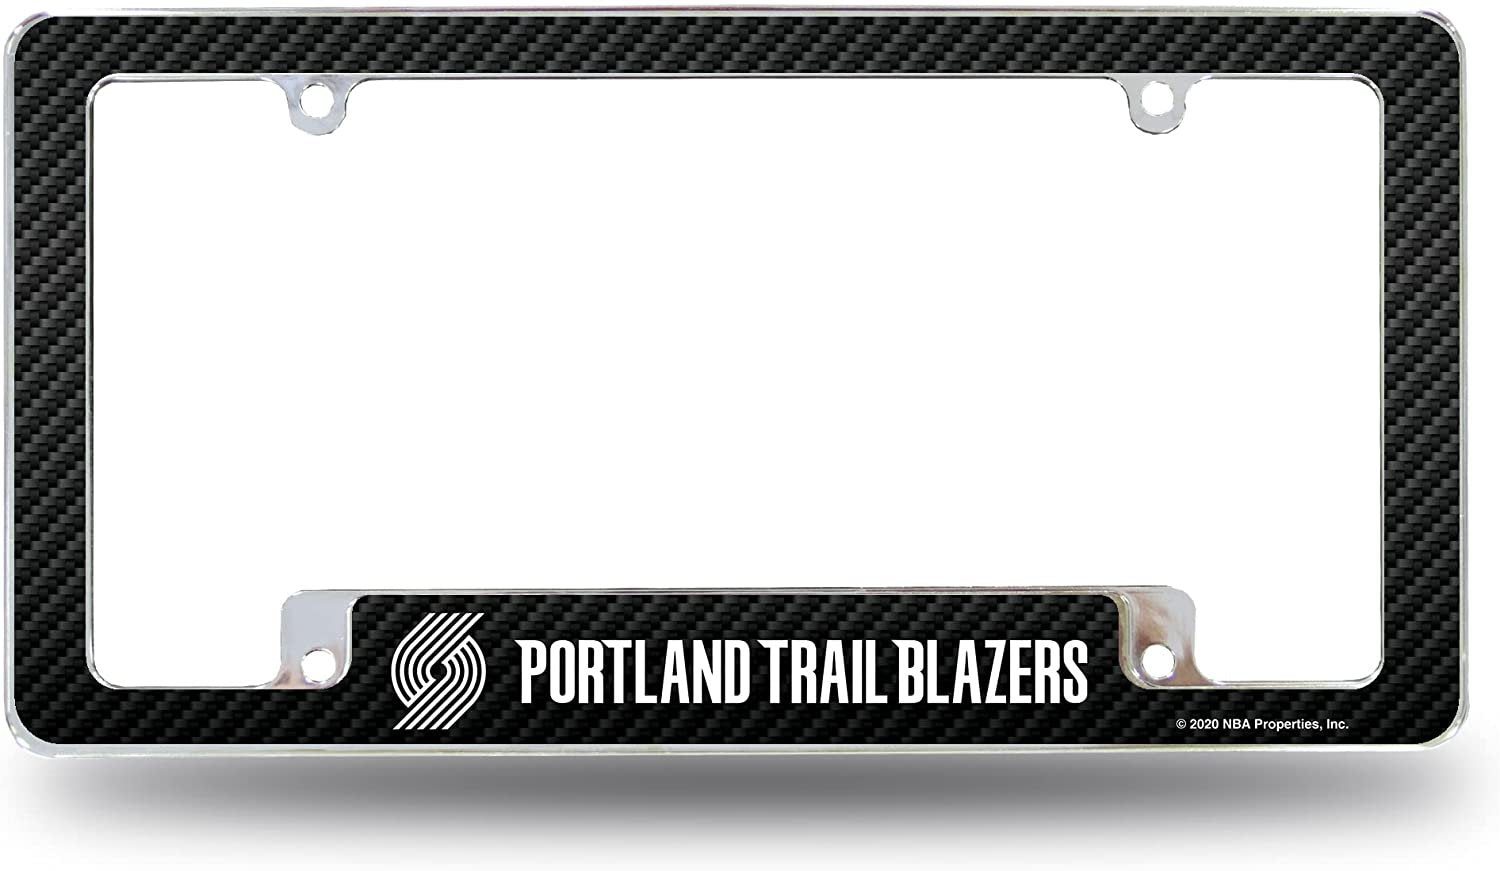 Portland Trail Blazers Metal License Plate Frame Chrome Tag Cover Carbon Fiber Design 12x6 Inch